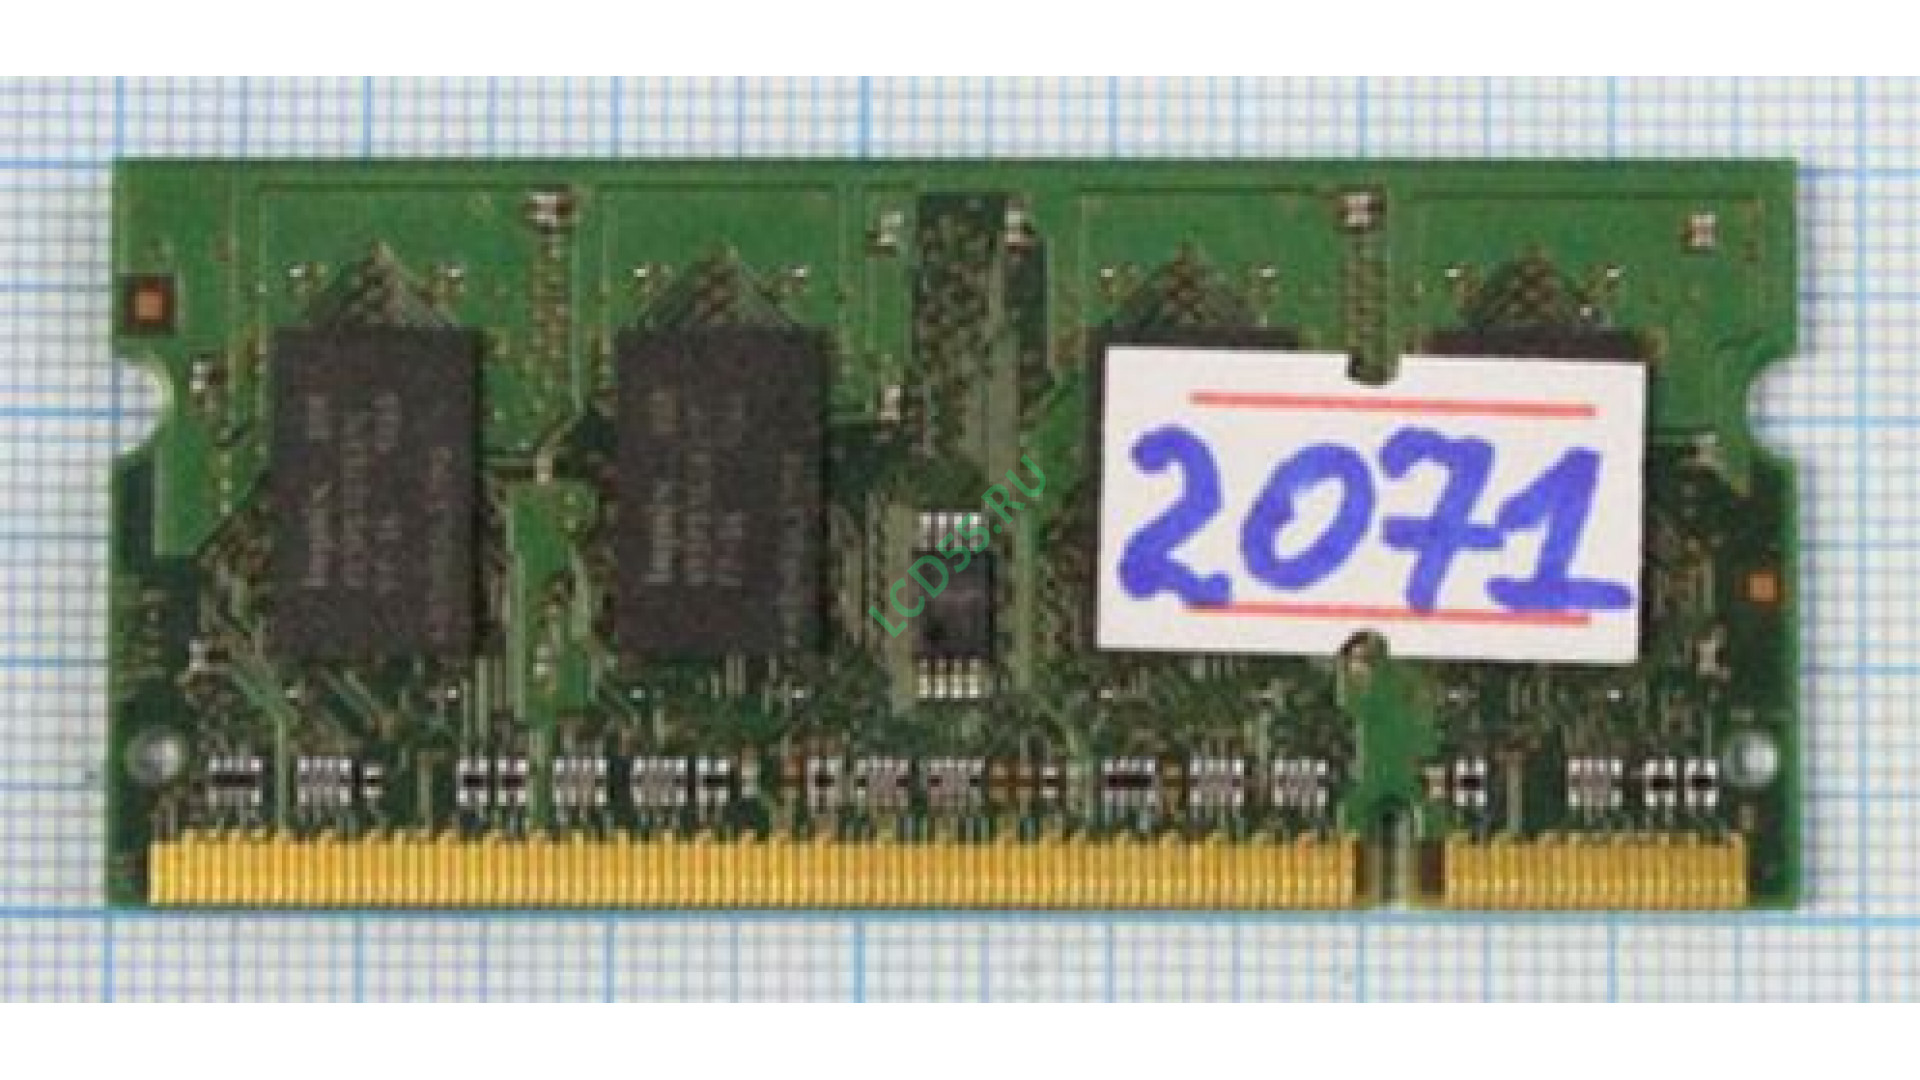 HYNIX DDR-II 800Mhz SODIMM 1Gb <PC2-6400>